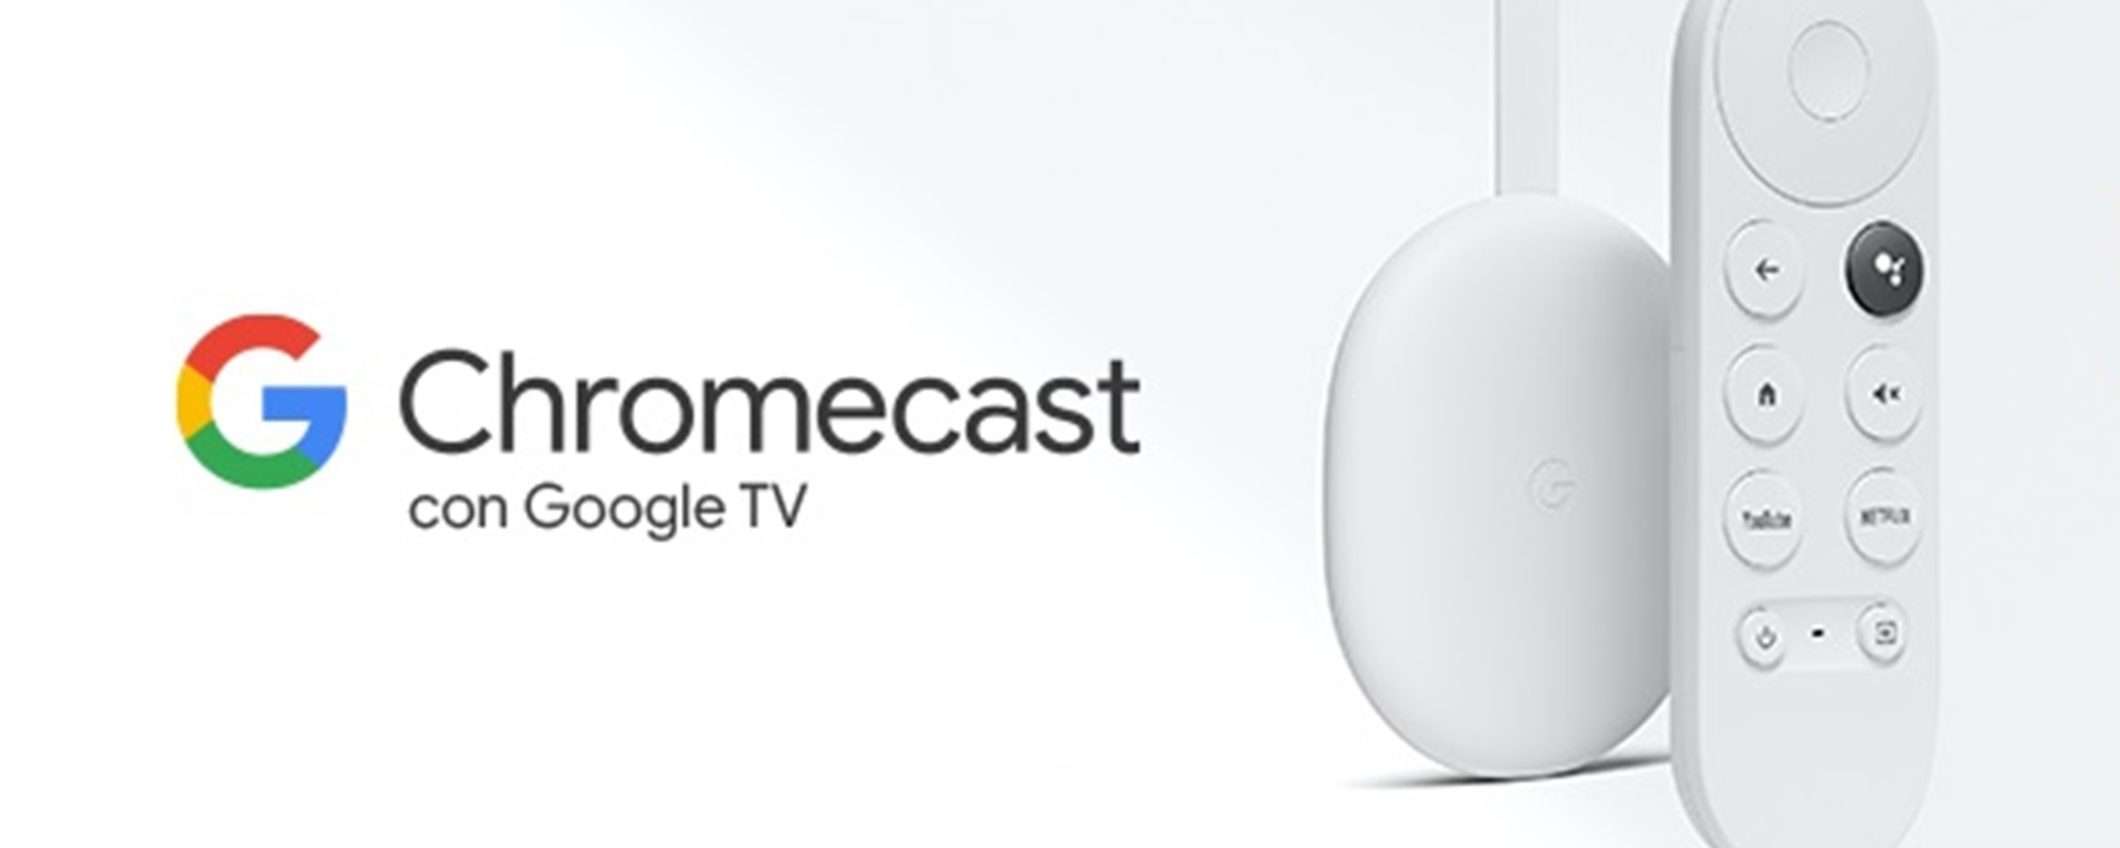 Google Chromecast 4K: la vostra vecchia TV diventa Smart con soli 55€